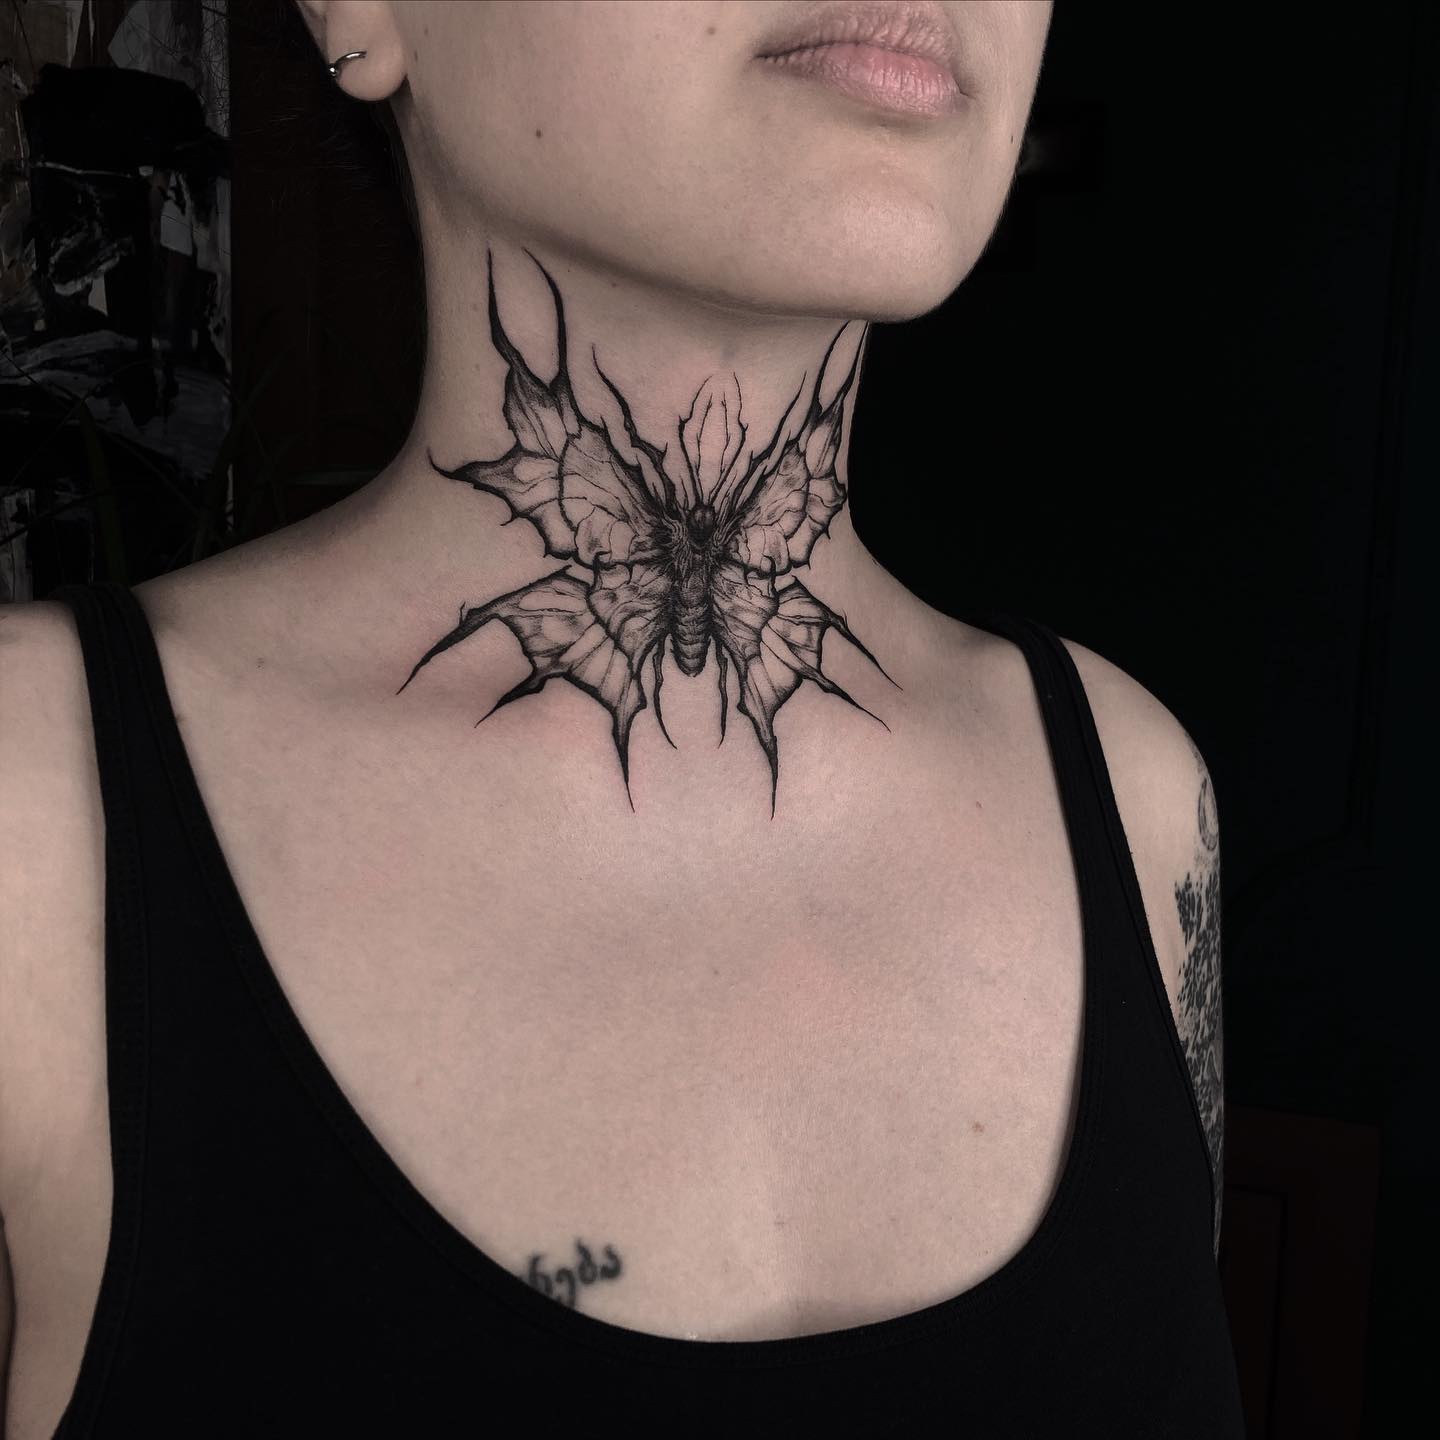 Moth tattoo on neck by nekropsy